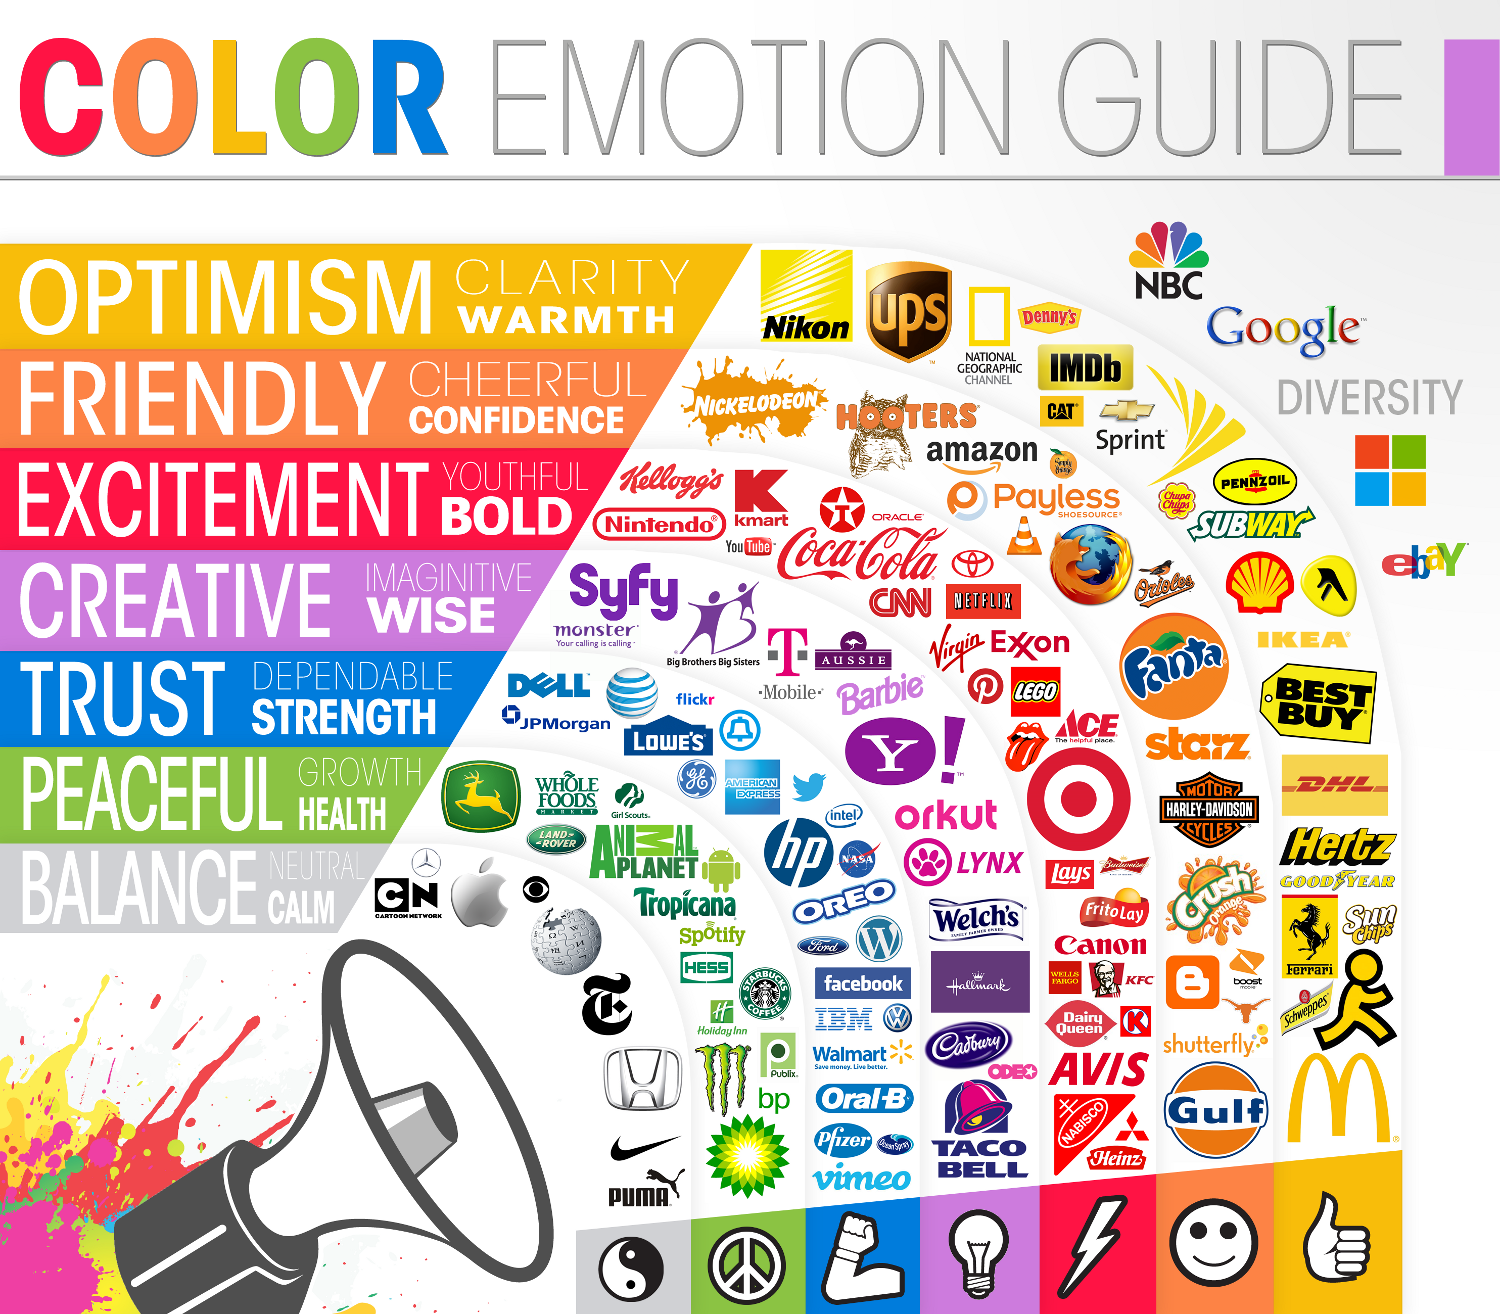 Color emotion chart.